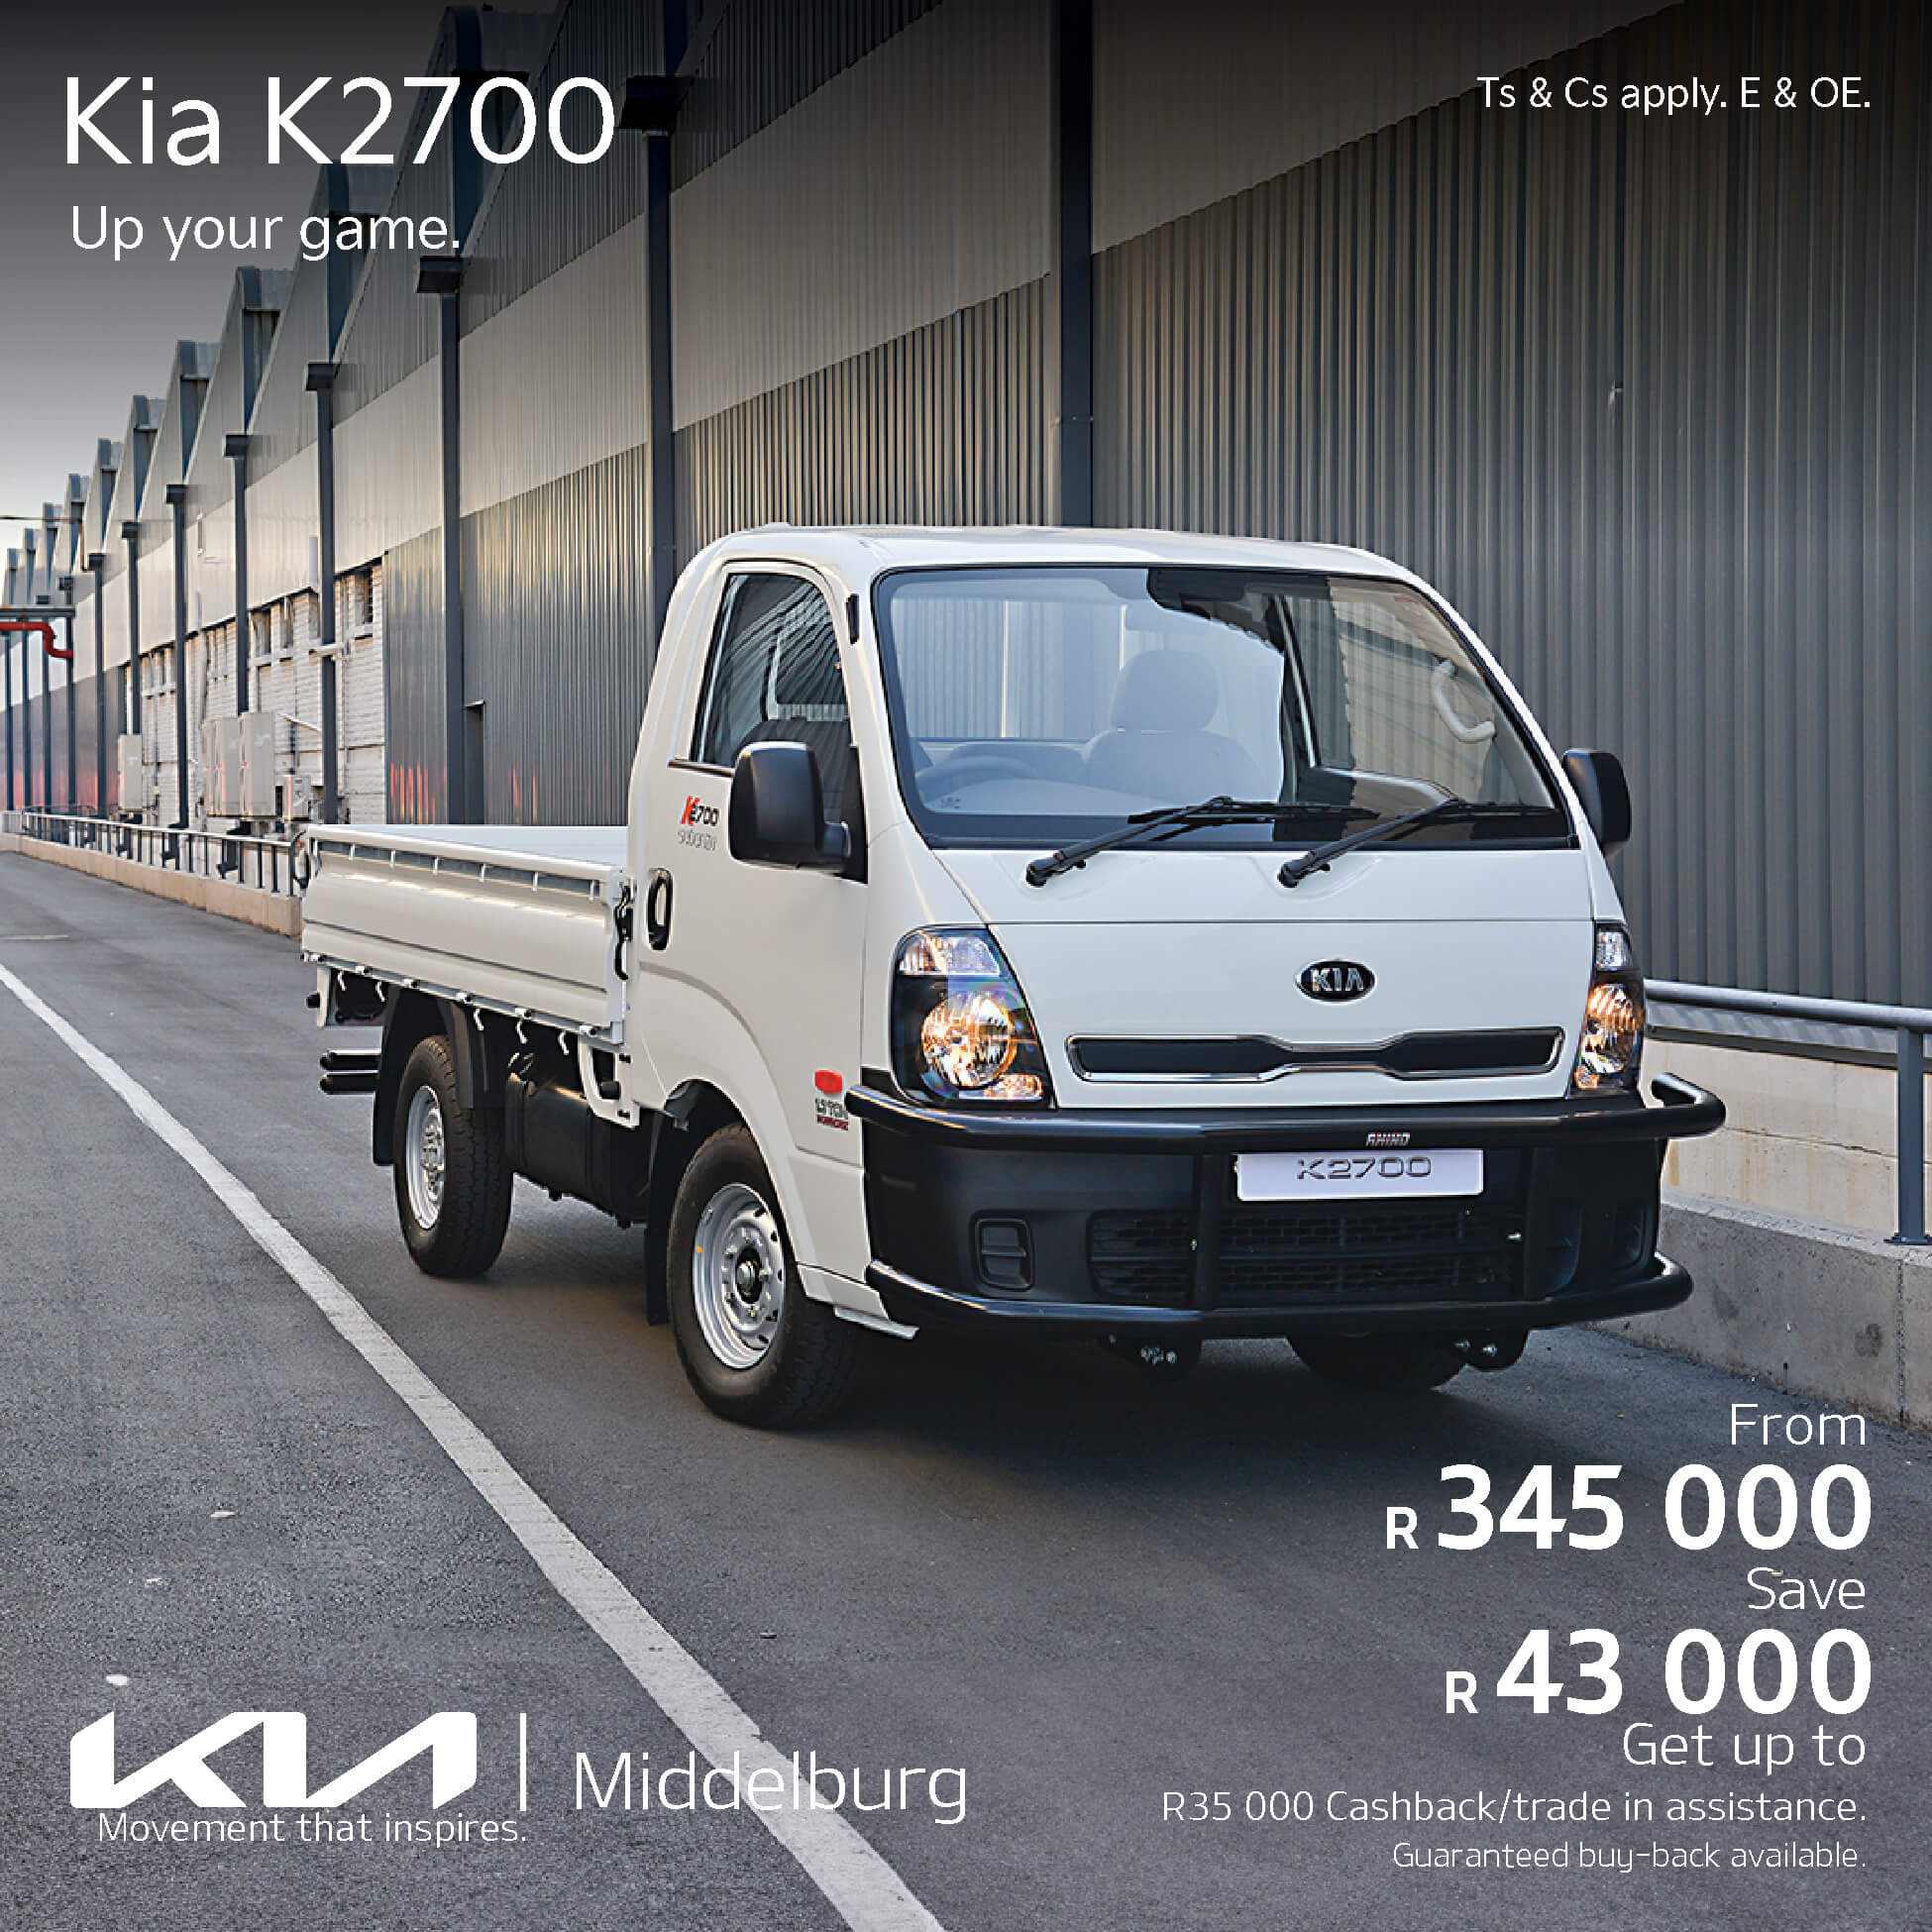 Kia K 2700 image from Eastvaal Motors